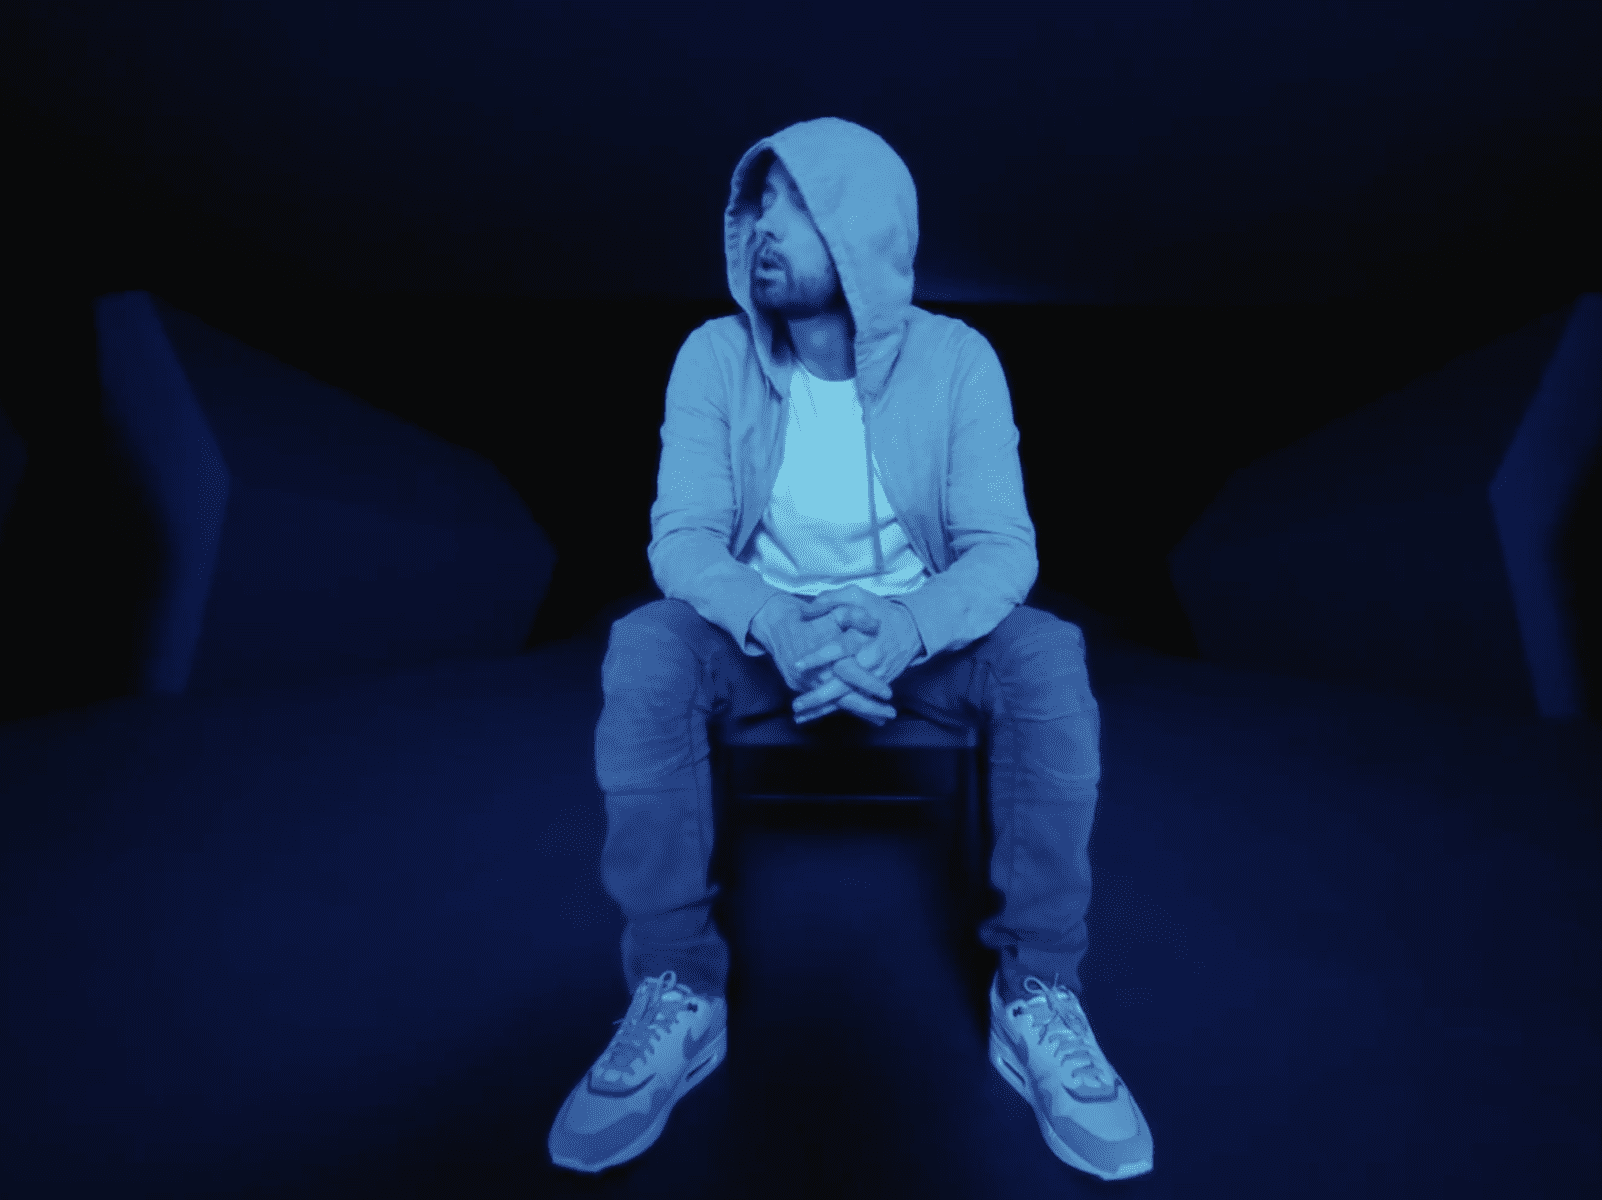 Watch: Here's A Full Breakdown Of Eminem + Juice WRLD's GODZILLA